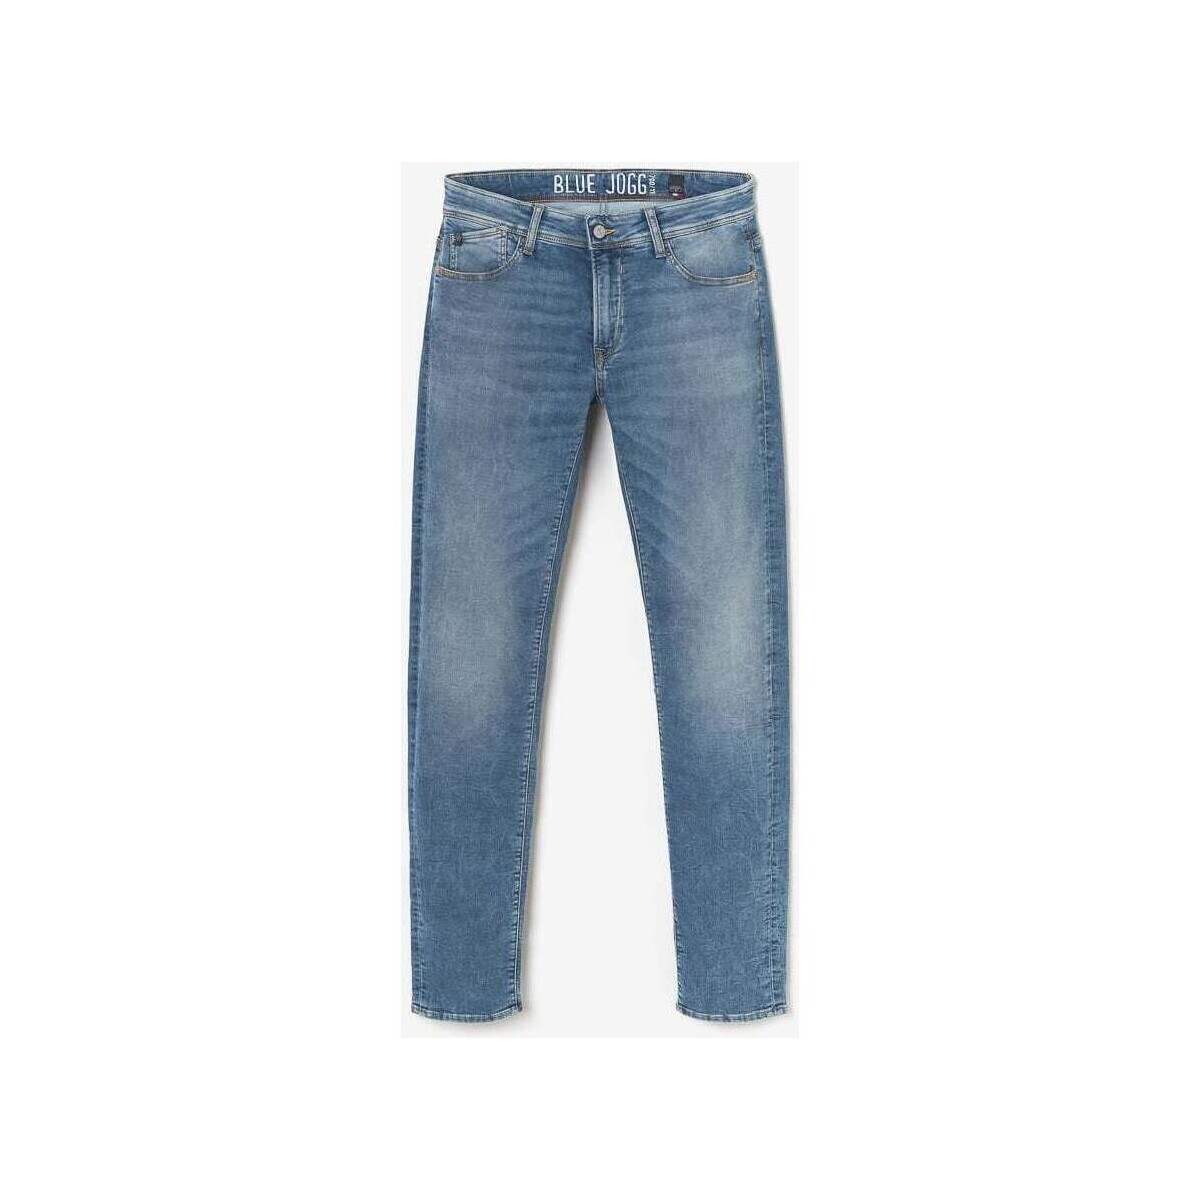 Le Temps des Cerises Bleu Jogg 700/11 adjusted jeans bleu gMua6w4p